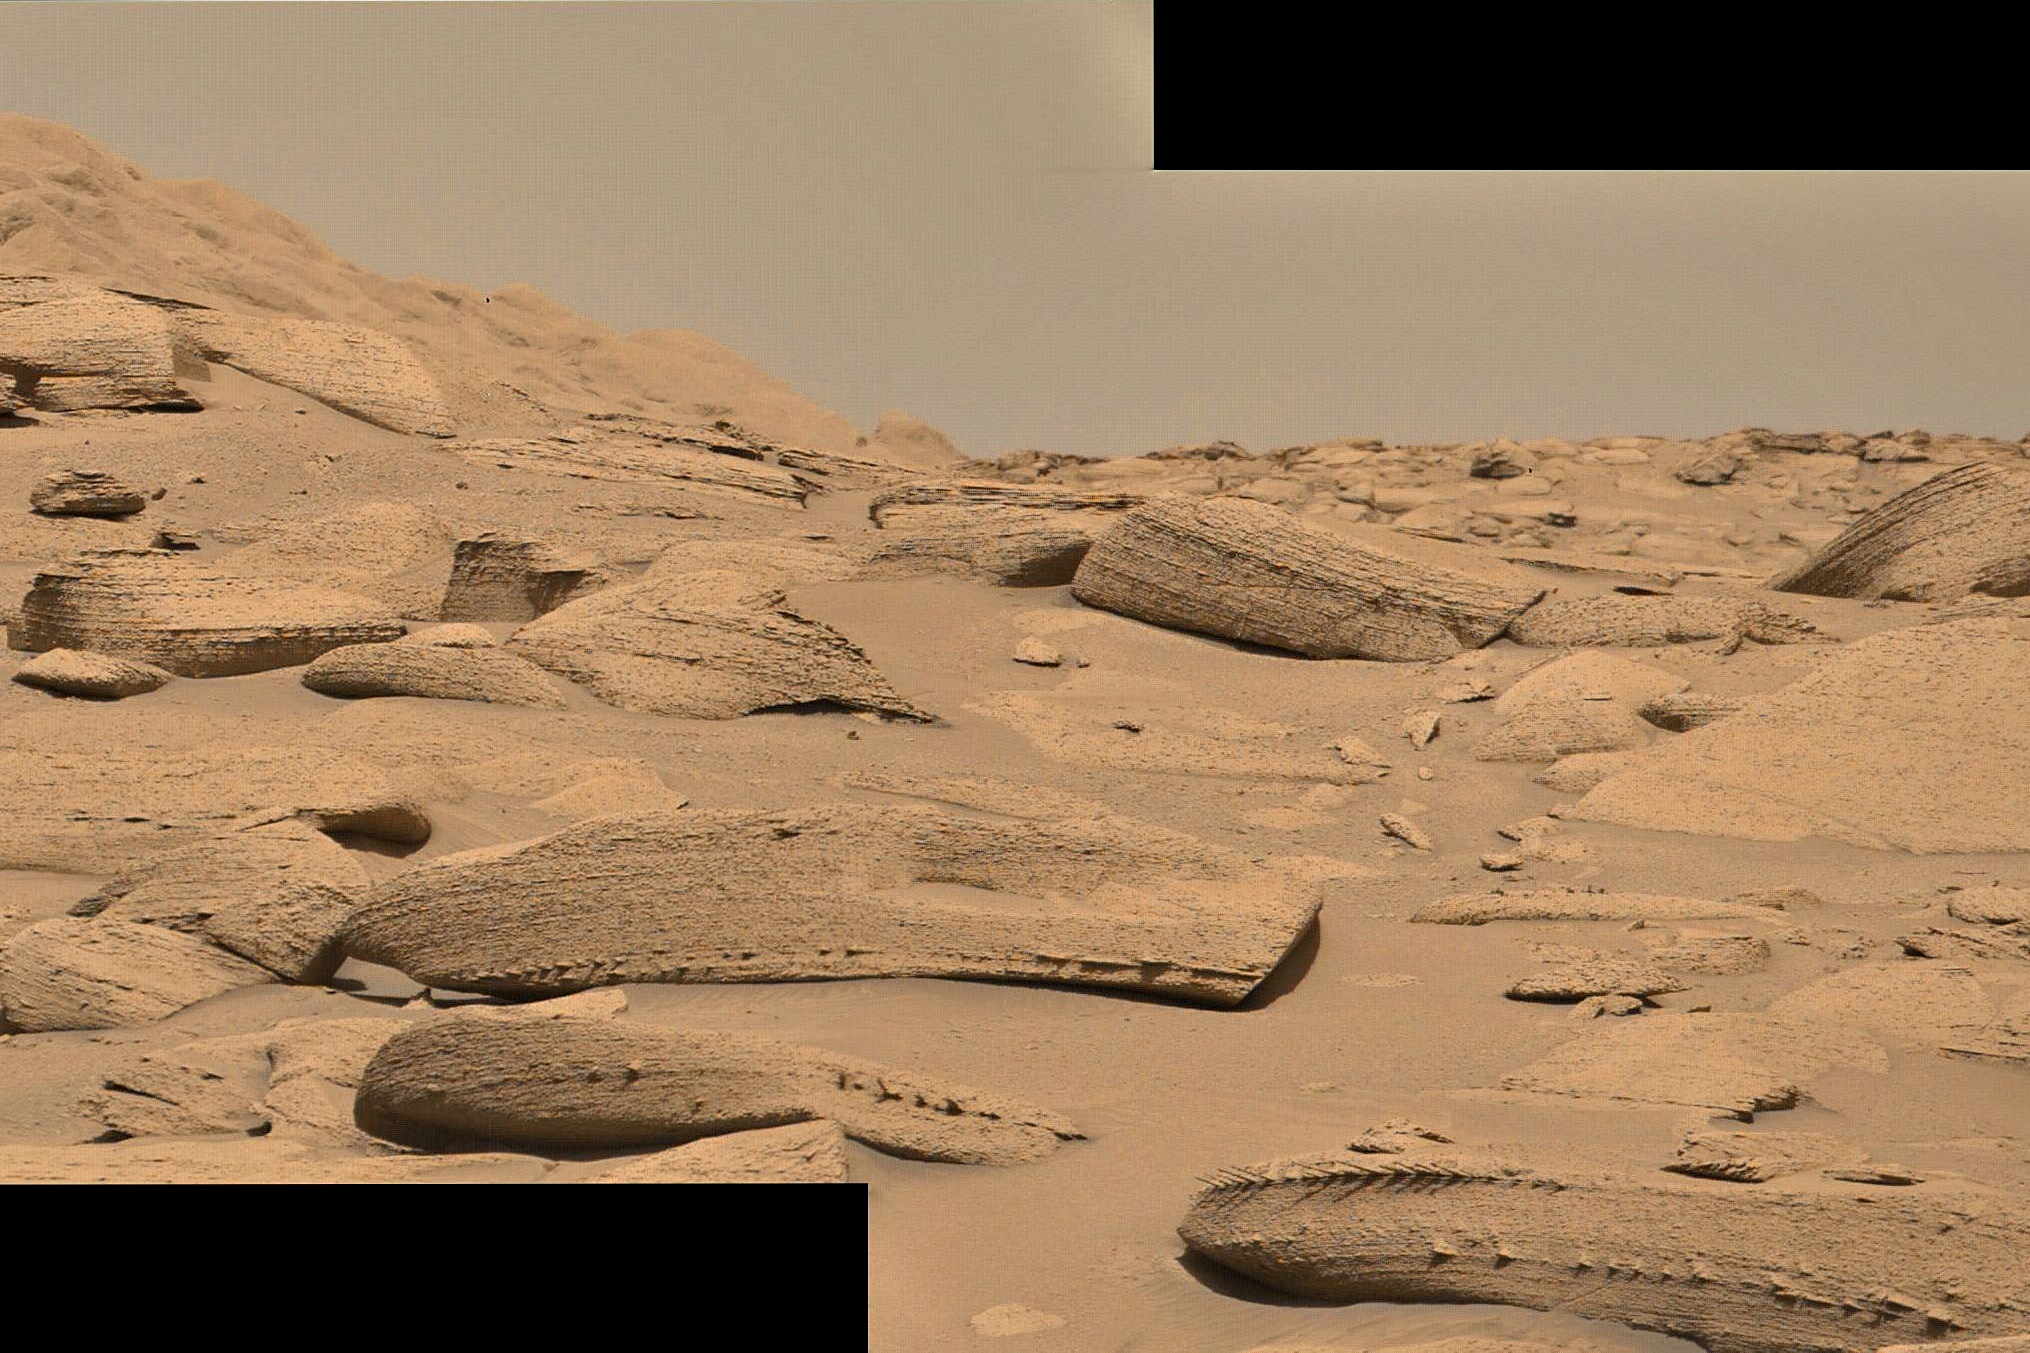 Dragon bones on Mars? Curiosity spies weird rocks